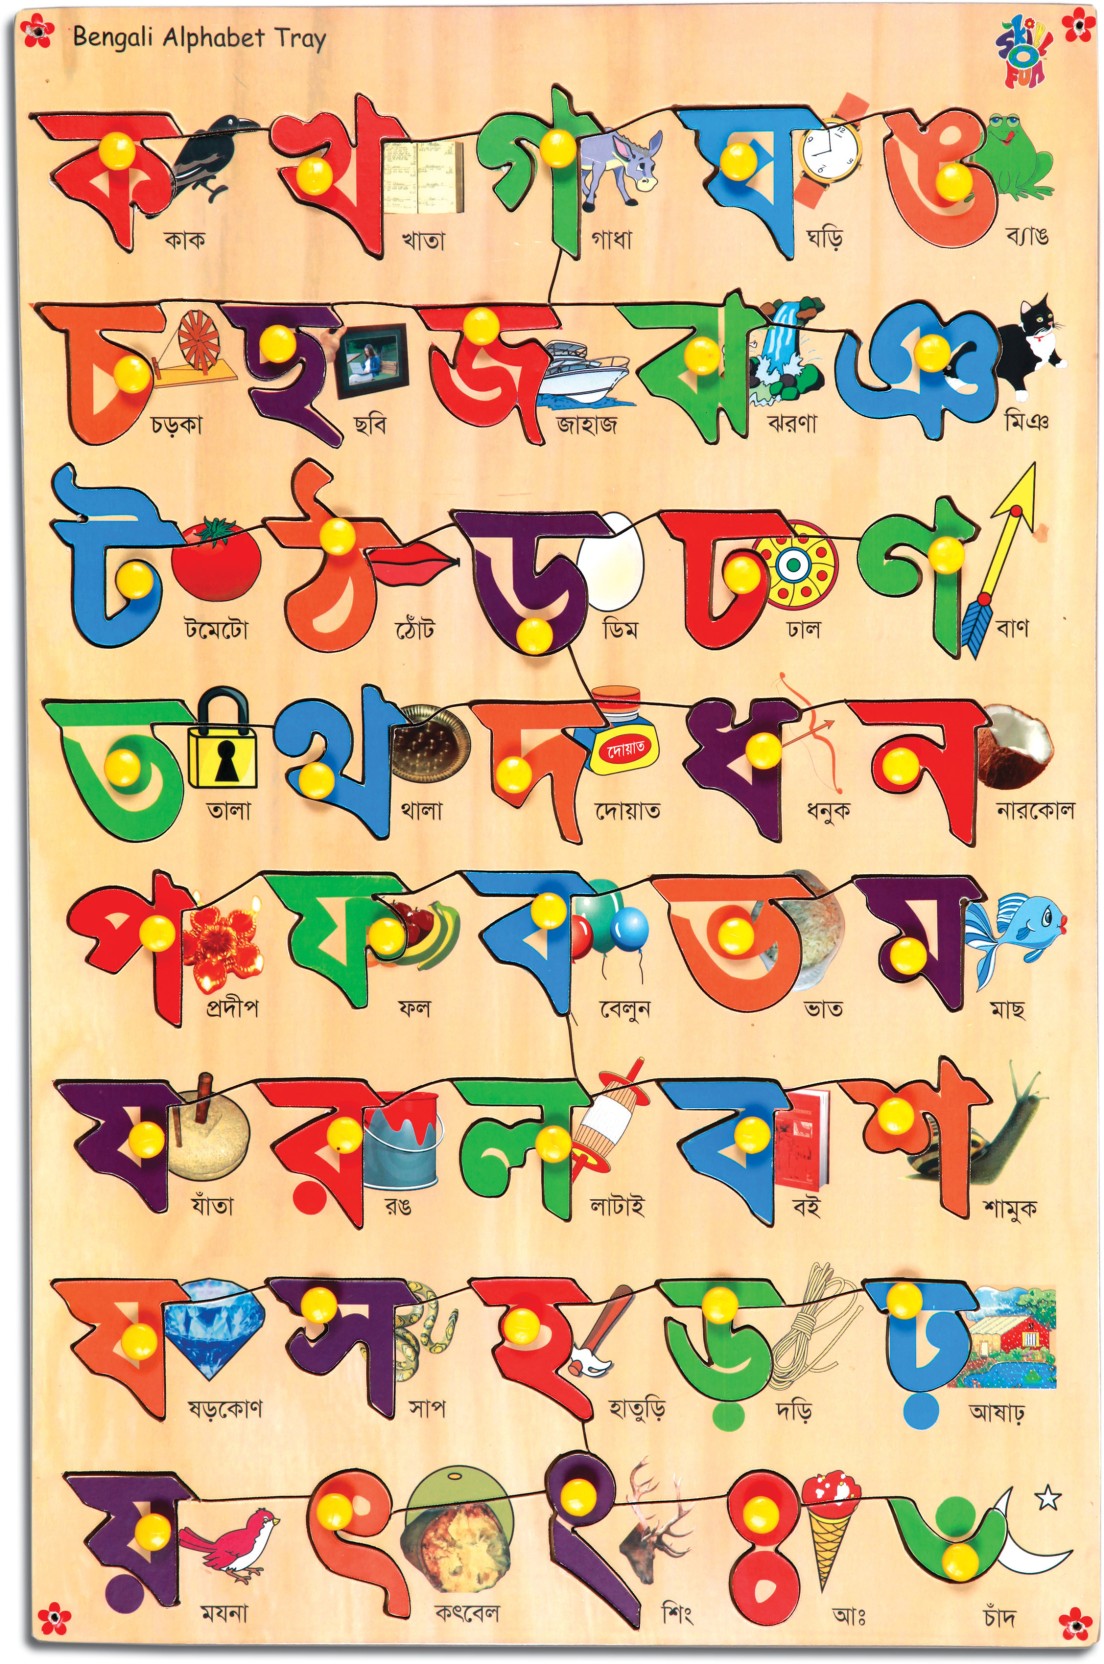 bengali alphabet and pronunciation